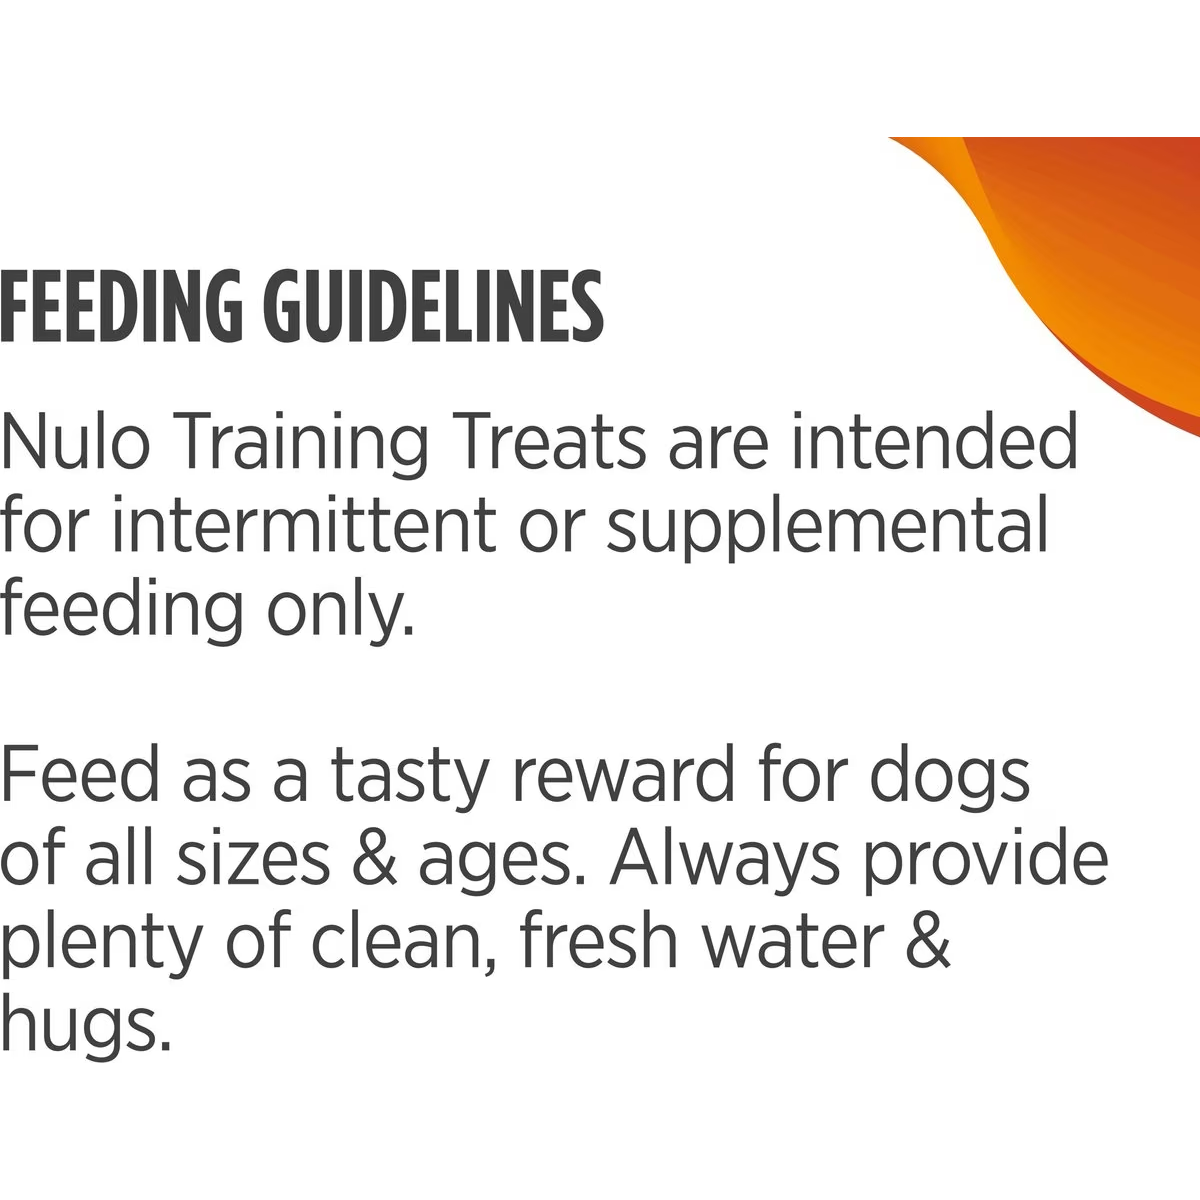 Nulo Freestyle Turkey Recipe Grain-Free Dog Training Treats  Dog Treats  | PetMax Canada